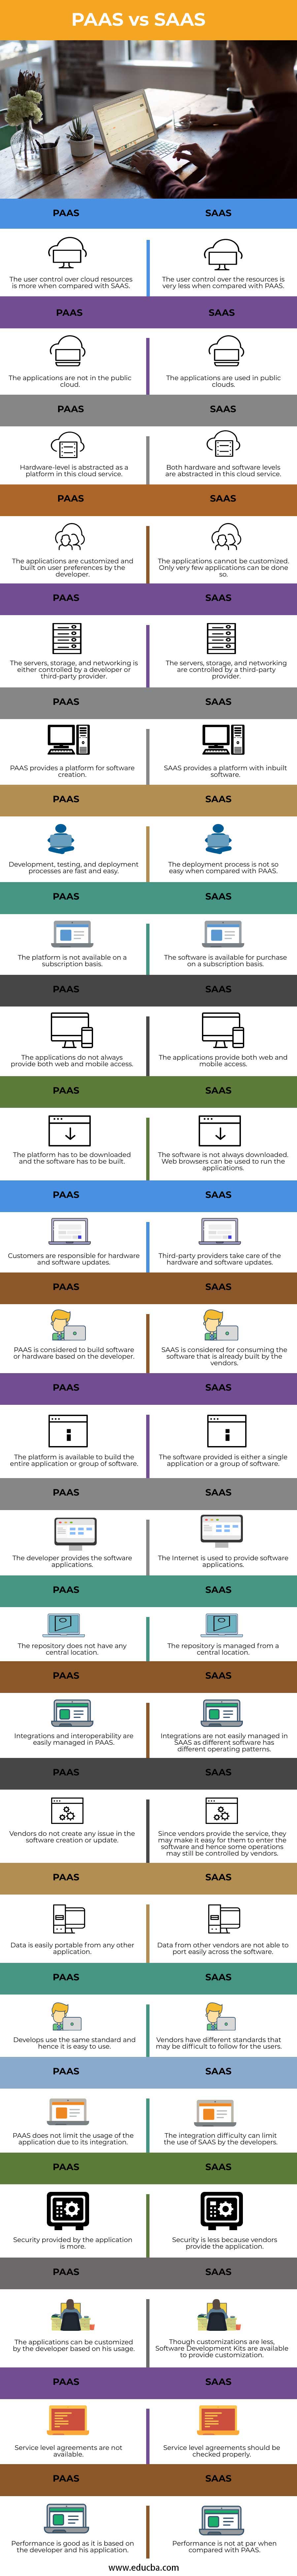 PAAS-vs-SAAS-info